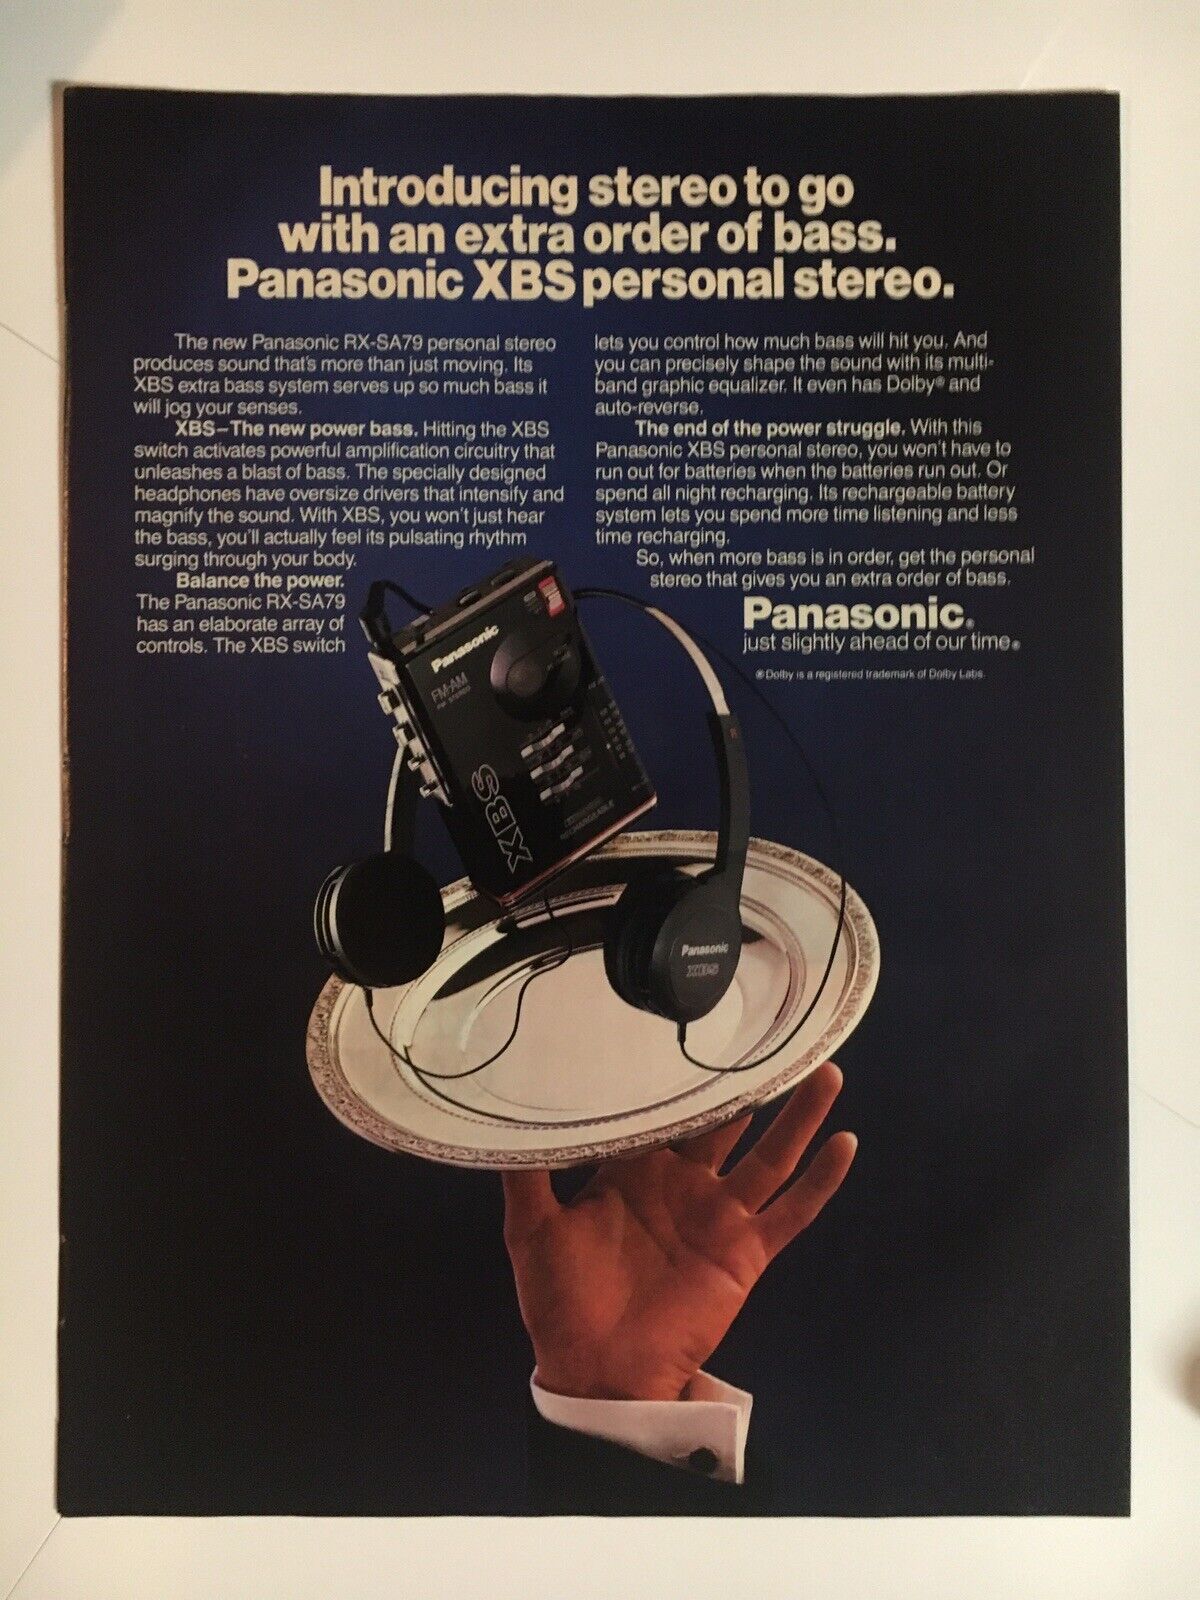 Panasonic XBS Personal Stereo 1987 Vintage Print Ad 8x11 Inches